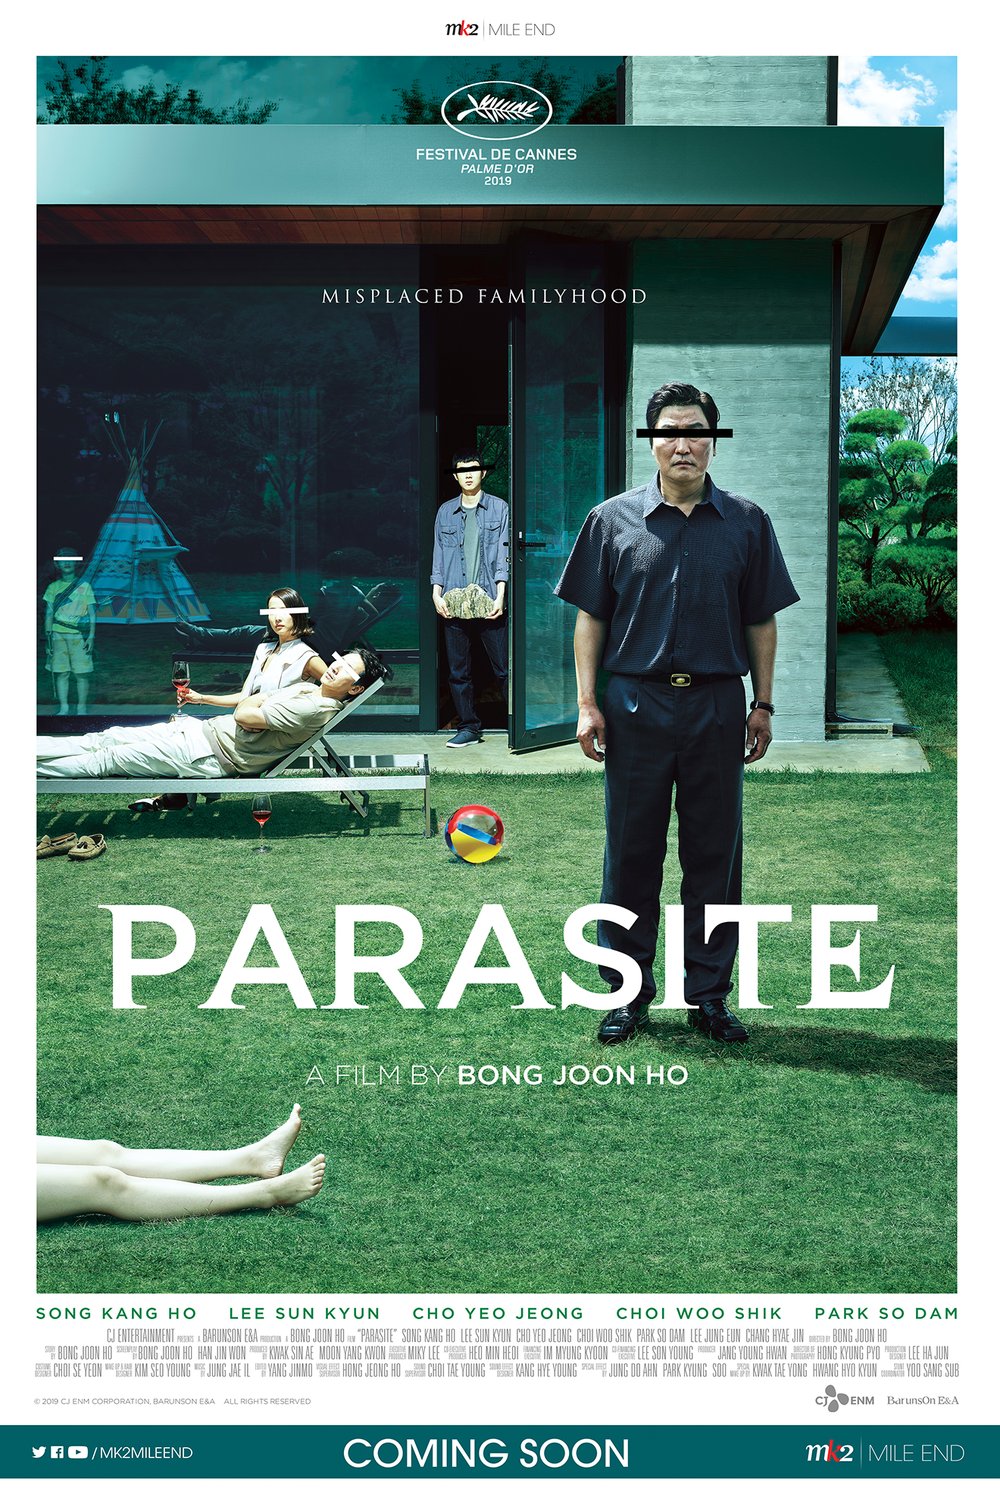 Poster of the movie Parasite v.f.